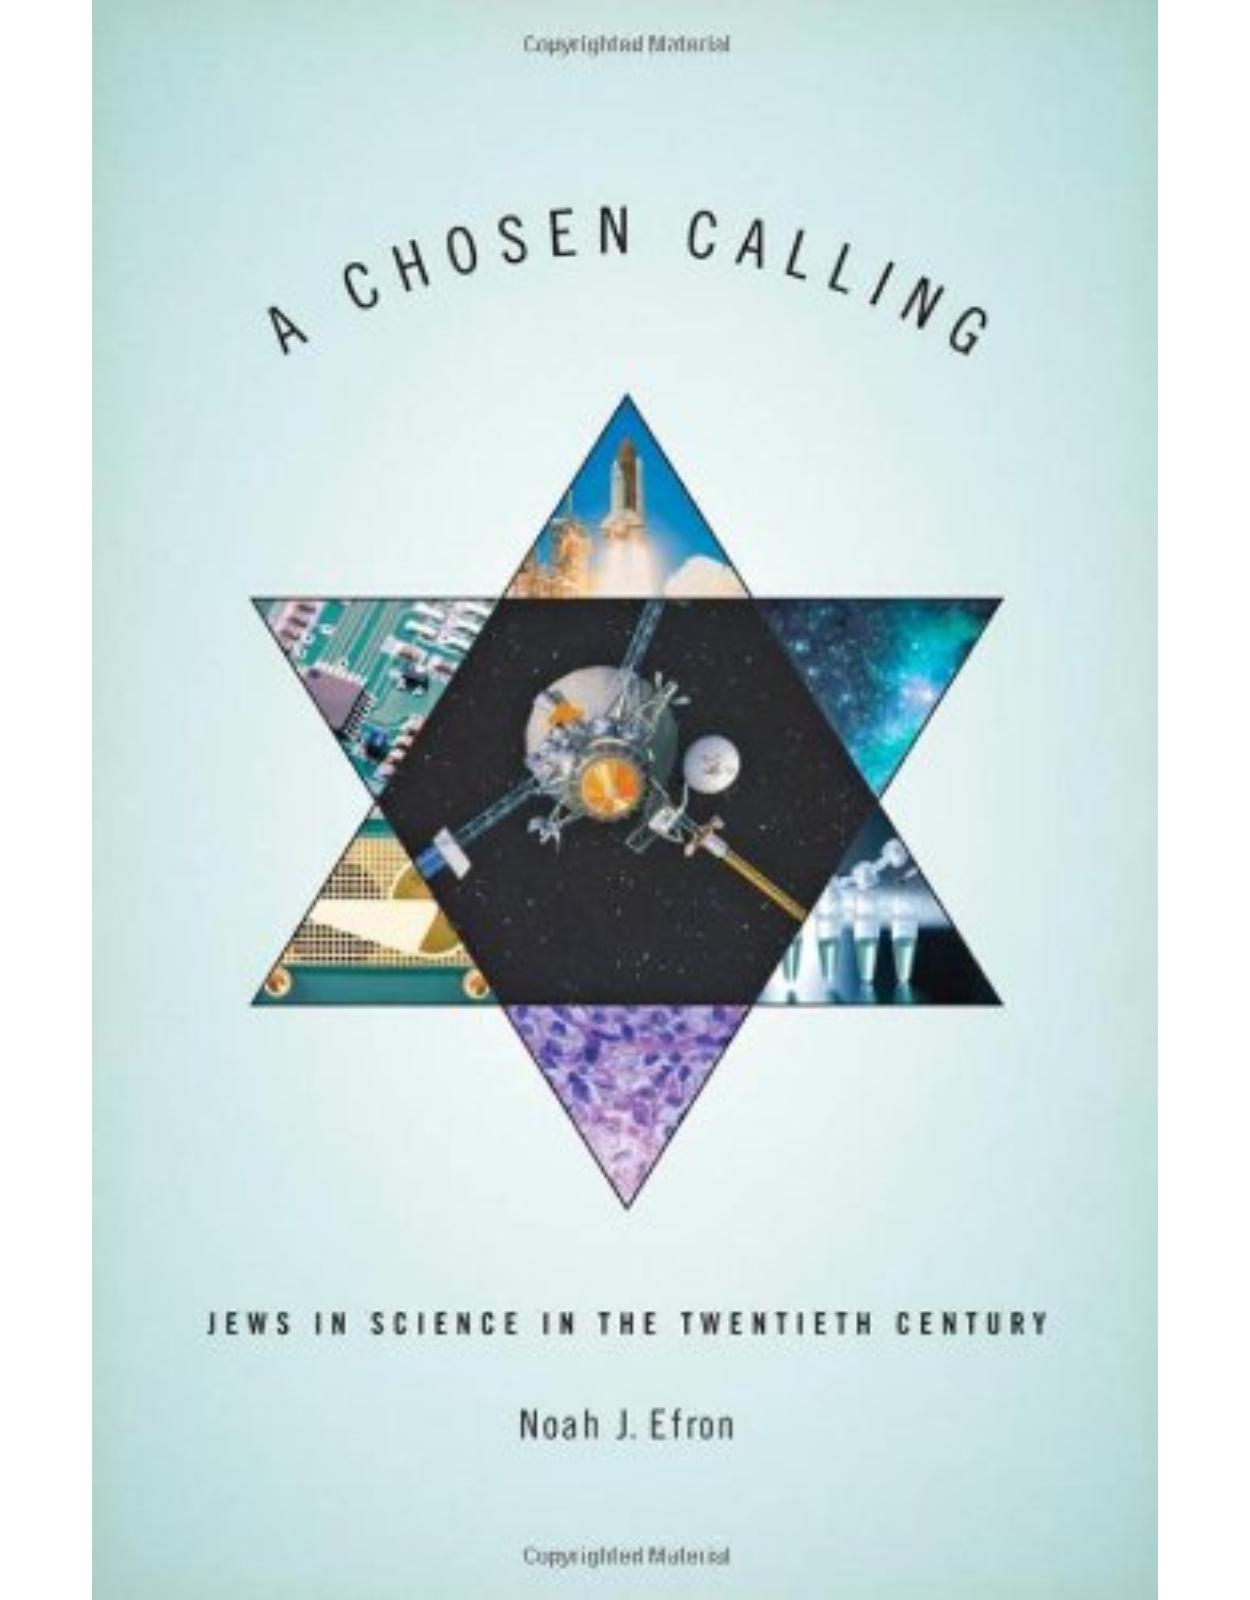 Chosen Calling, Jews in Science in the Twentieth Century